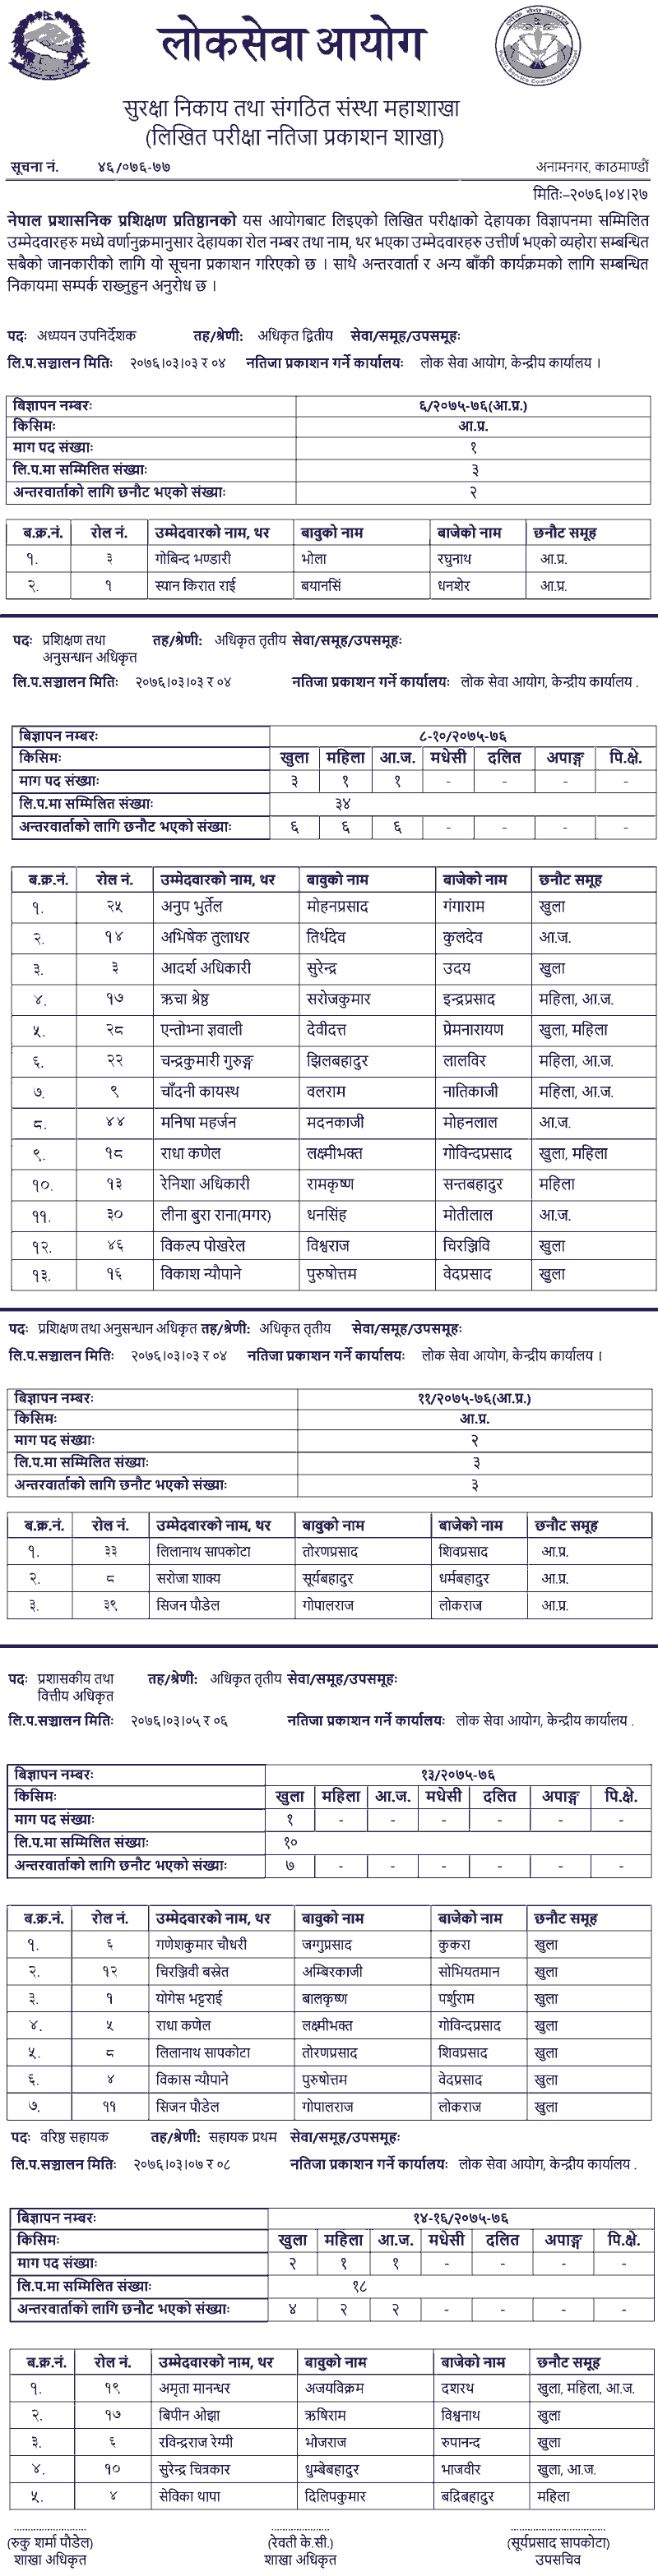 Nepal Administrative Staff College Written Exam Result 2076